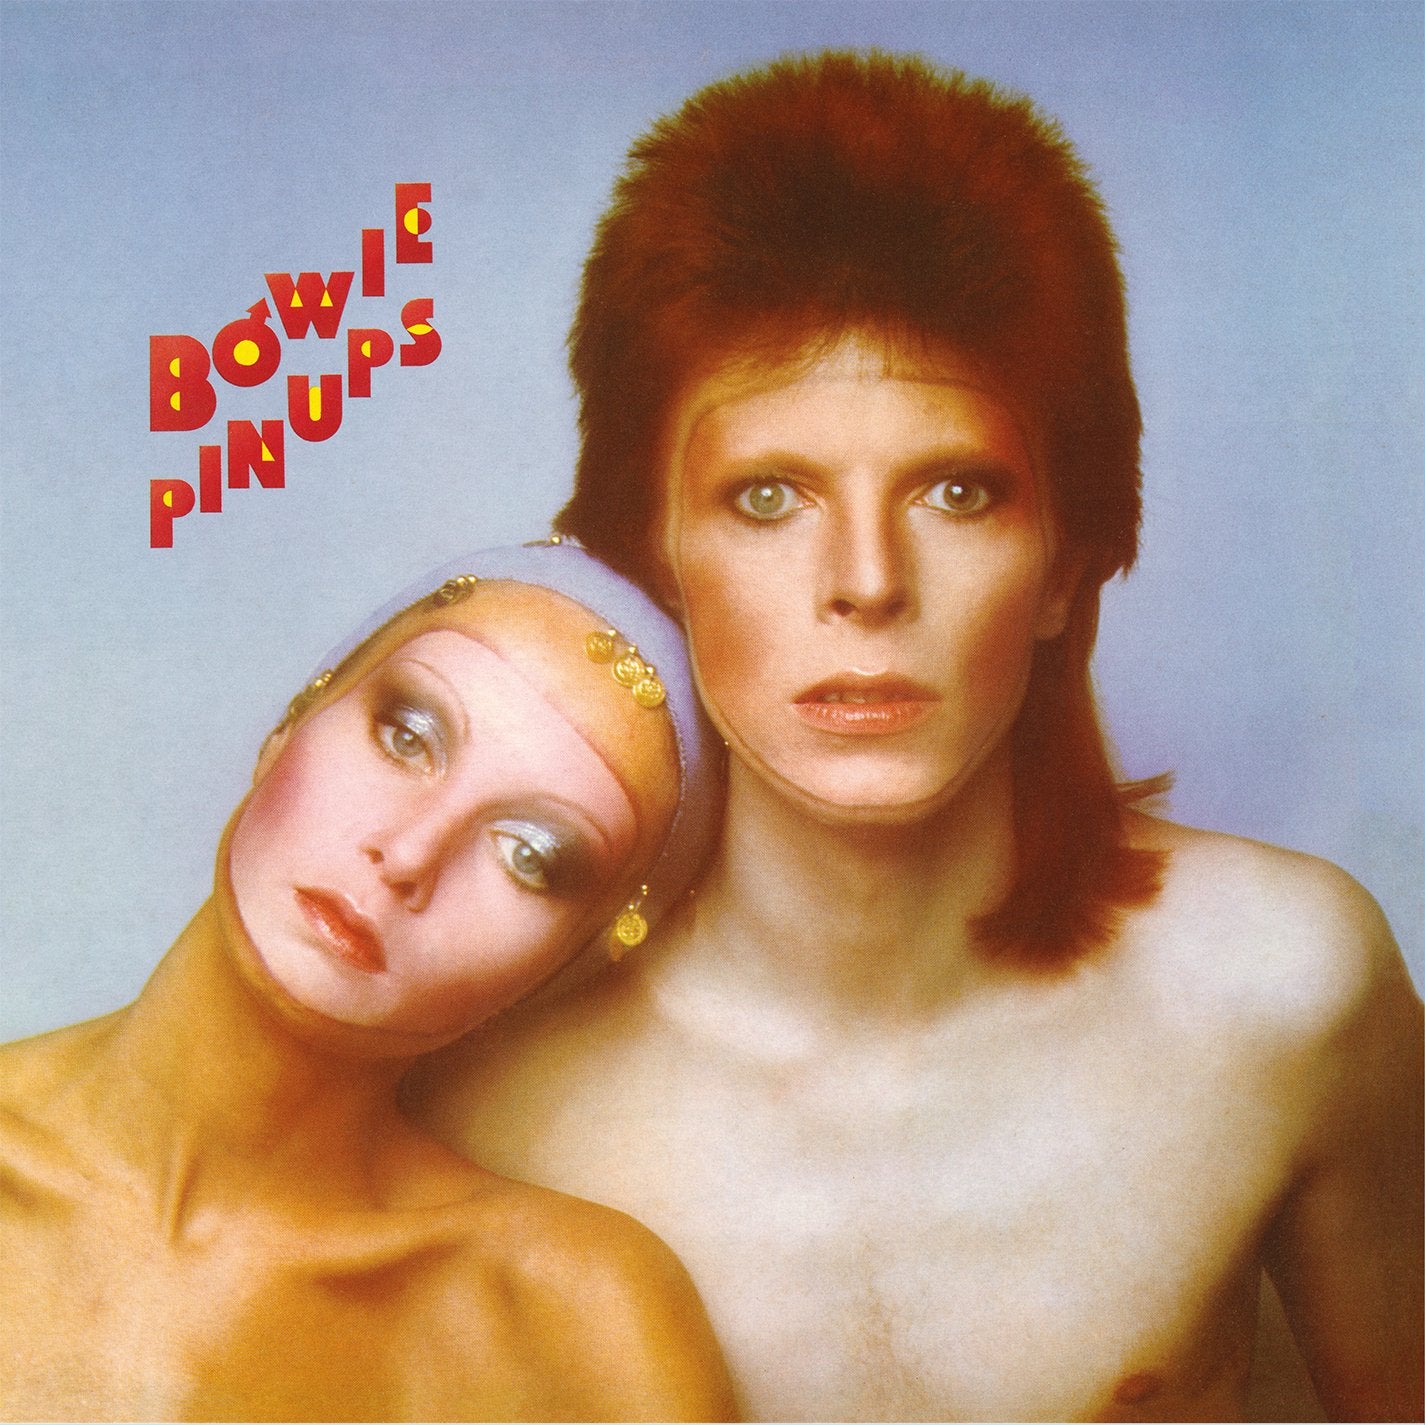 David Bowie - Pinups - Rock Pop